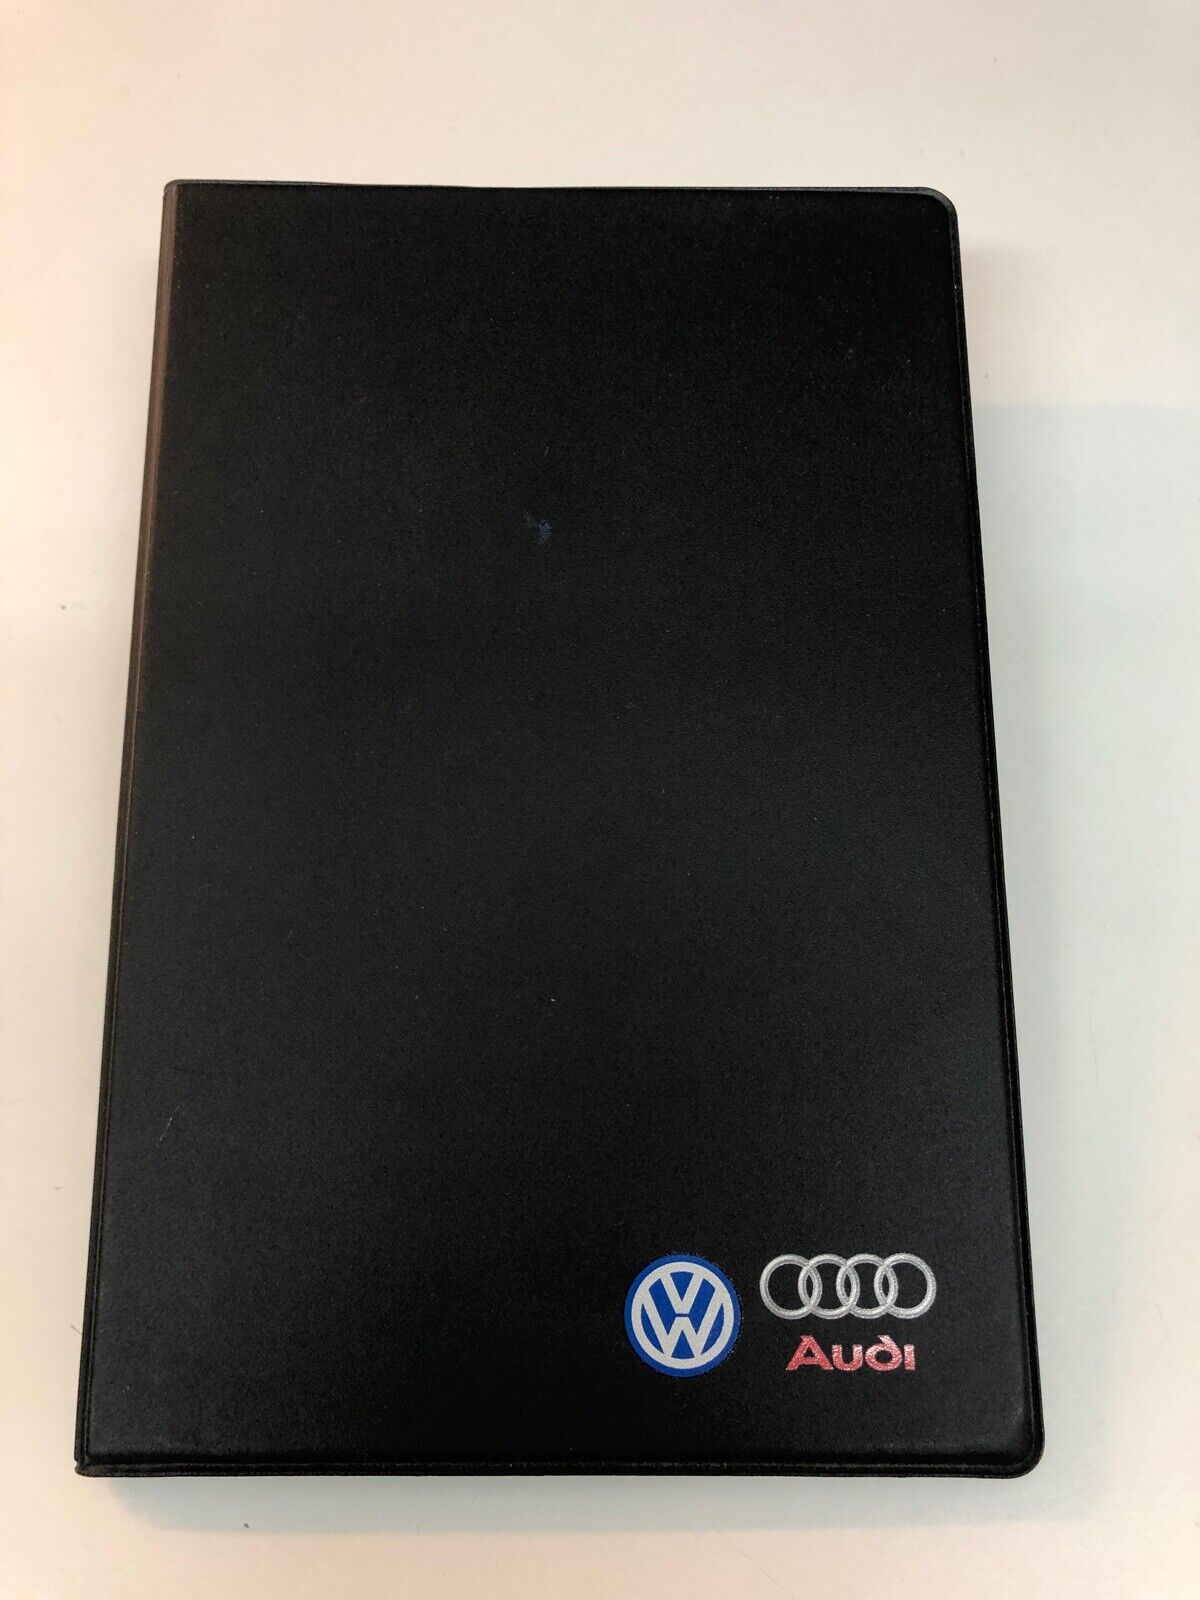 Vw Volkswagen Audi Black Notepad W/ Logos - Measures 9" Tall & 6" Wide - Rare